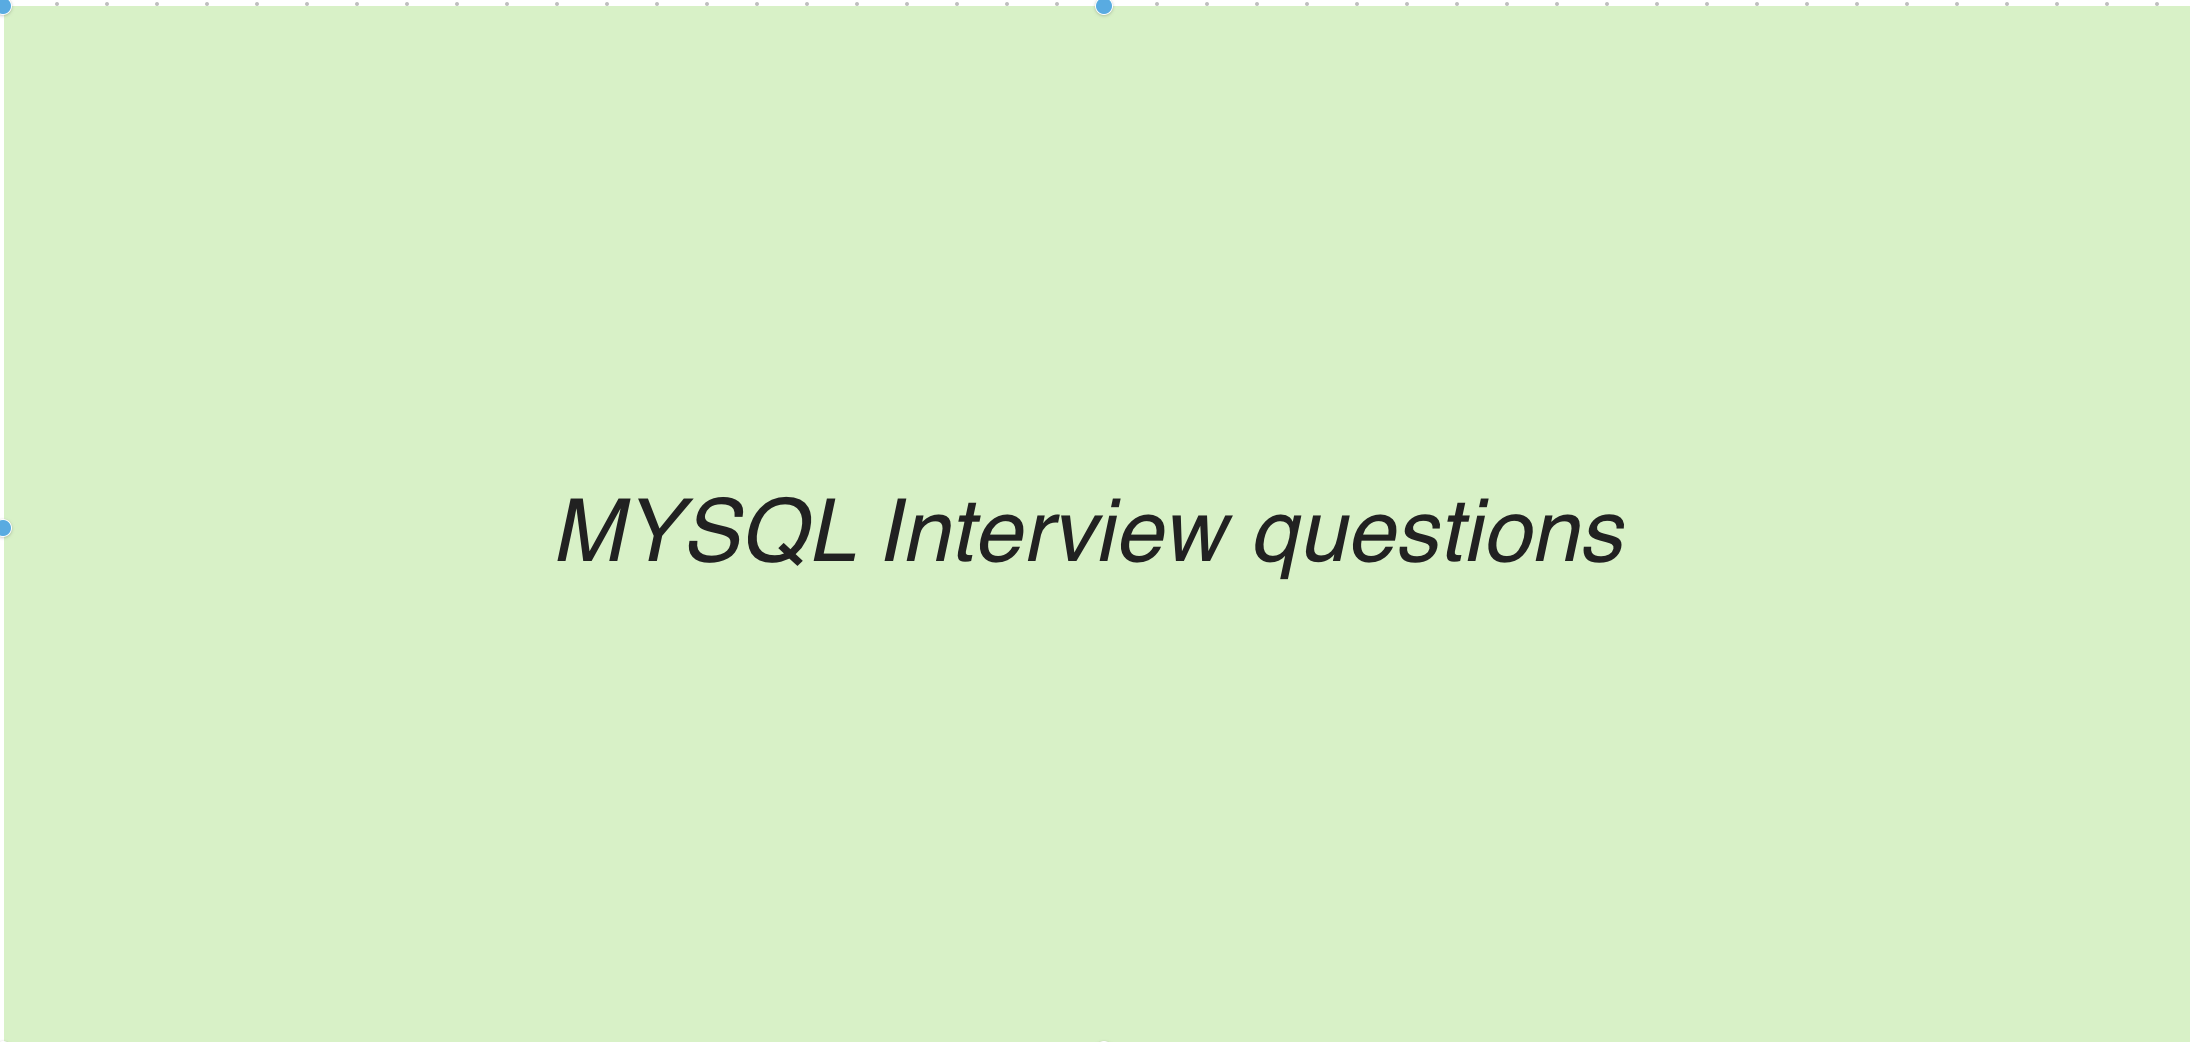 MYSQL Interview questions